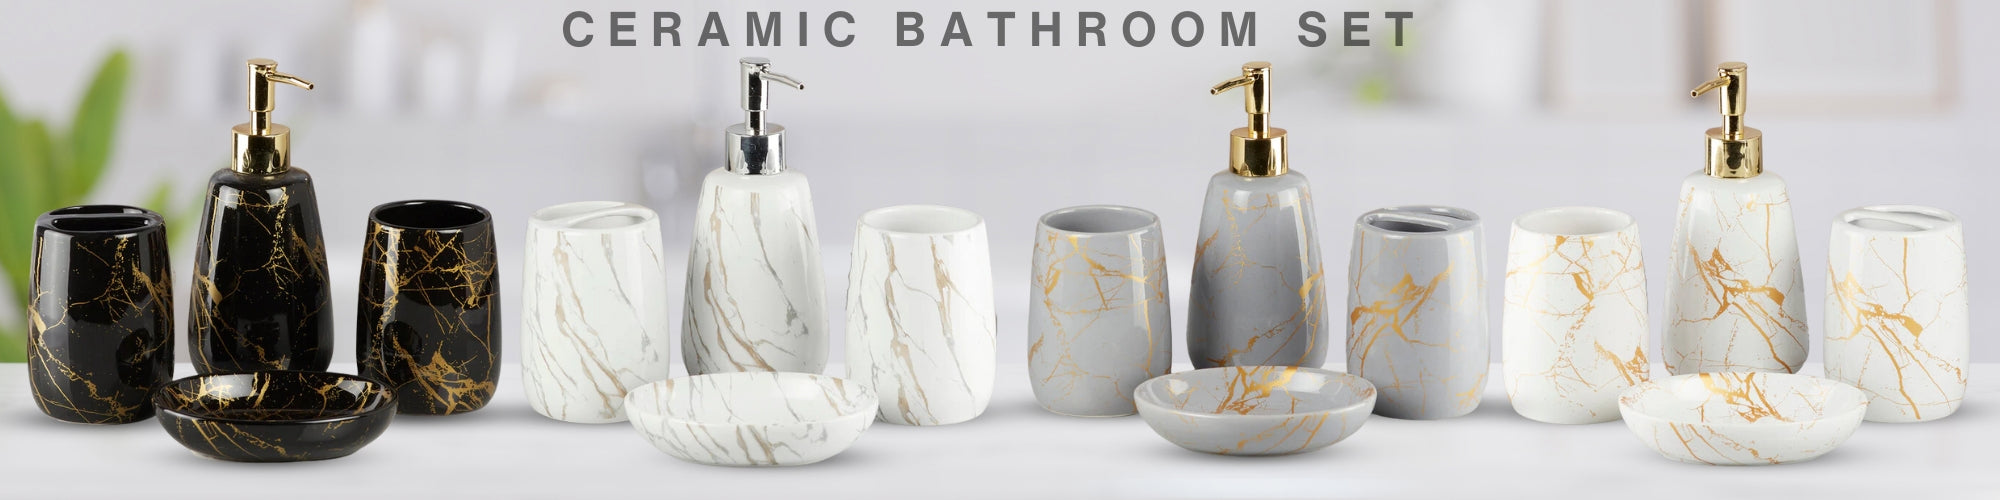 Ceramic Bathroom Sets